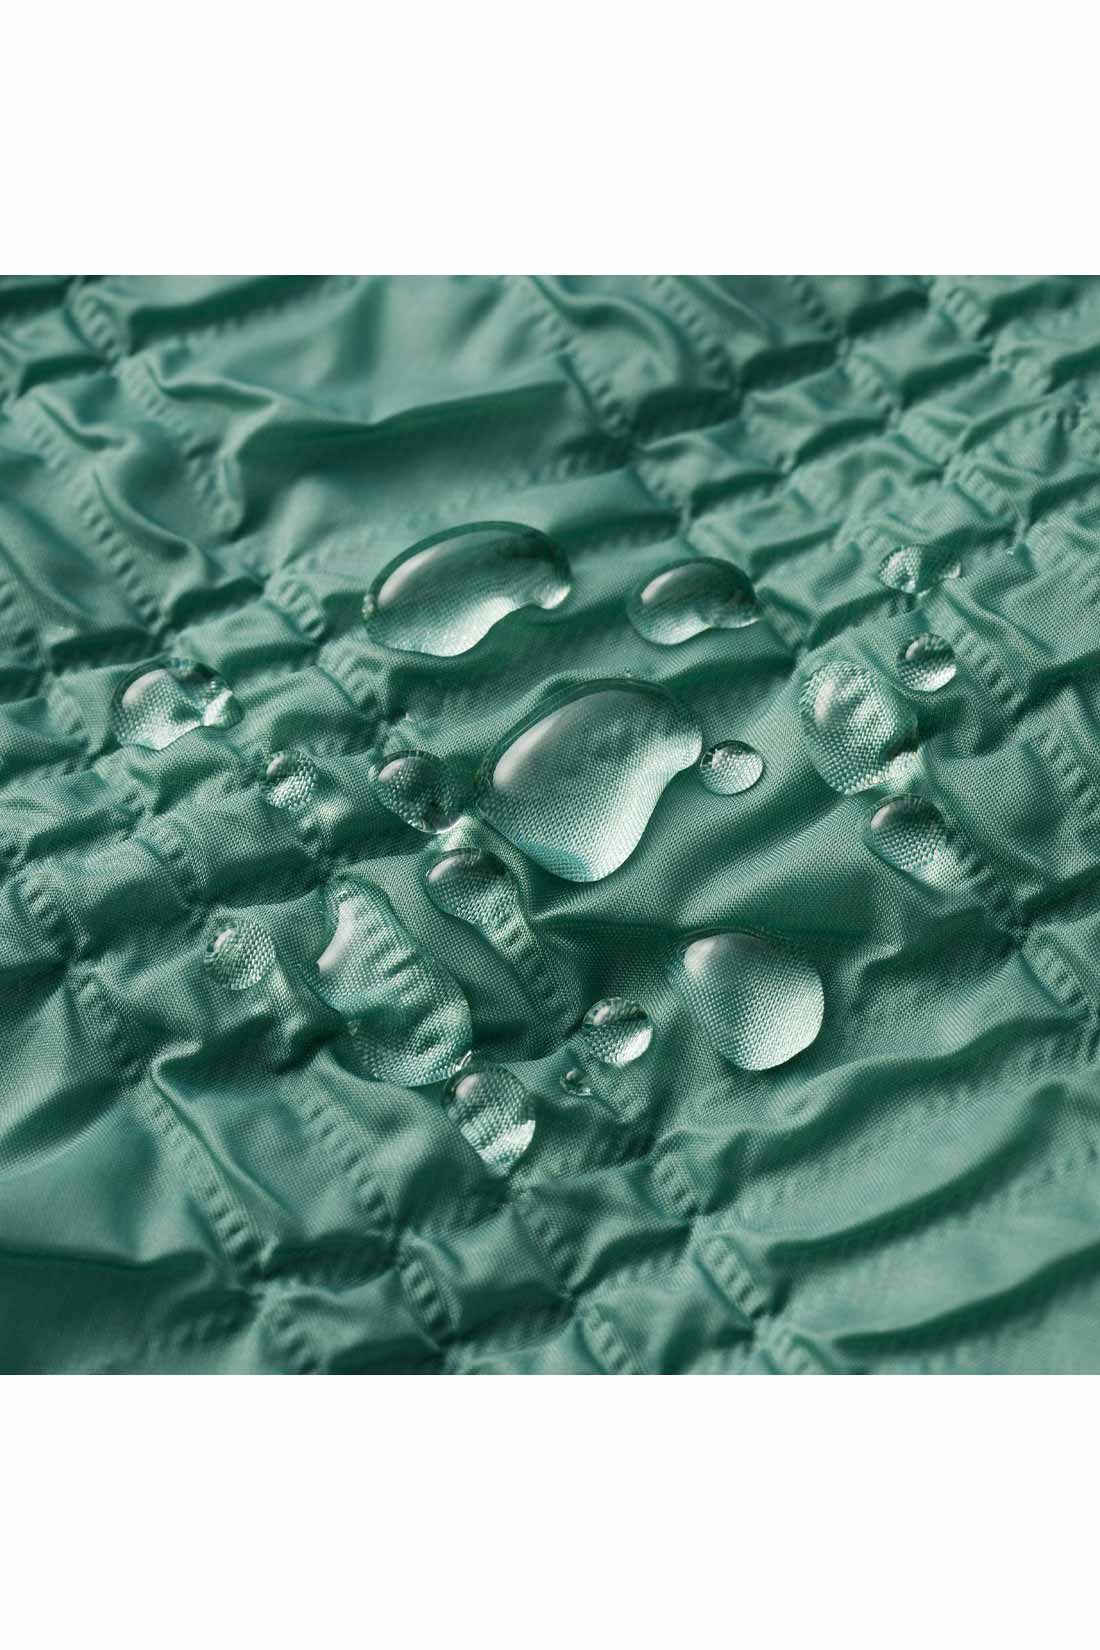 DRECO by IEDIT|【3～10日でお届け】IEDIT[イディット]　エンボス加工をほどこした撥水（はっすい）素材の切り替えスカート〈モスグリーン〉|撥水加工をほどこしたナイロン素材はテカリをおさえた上品な素材感。